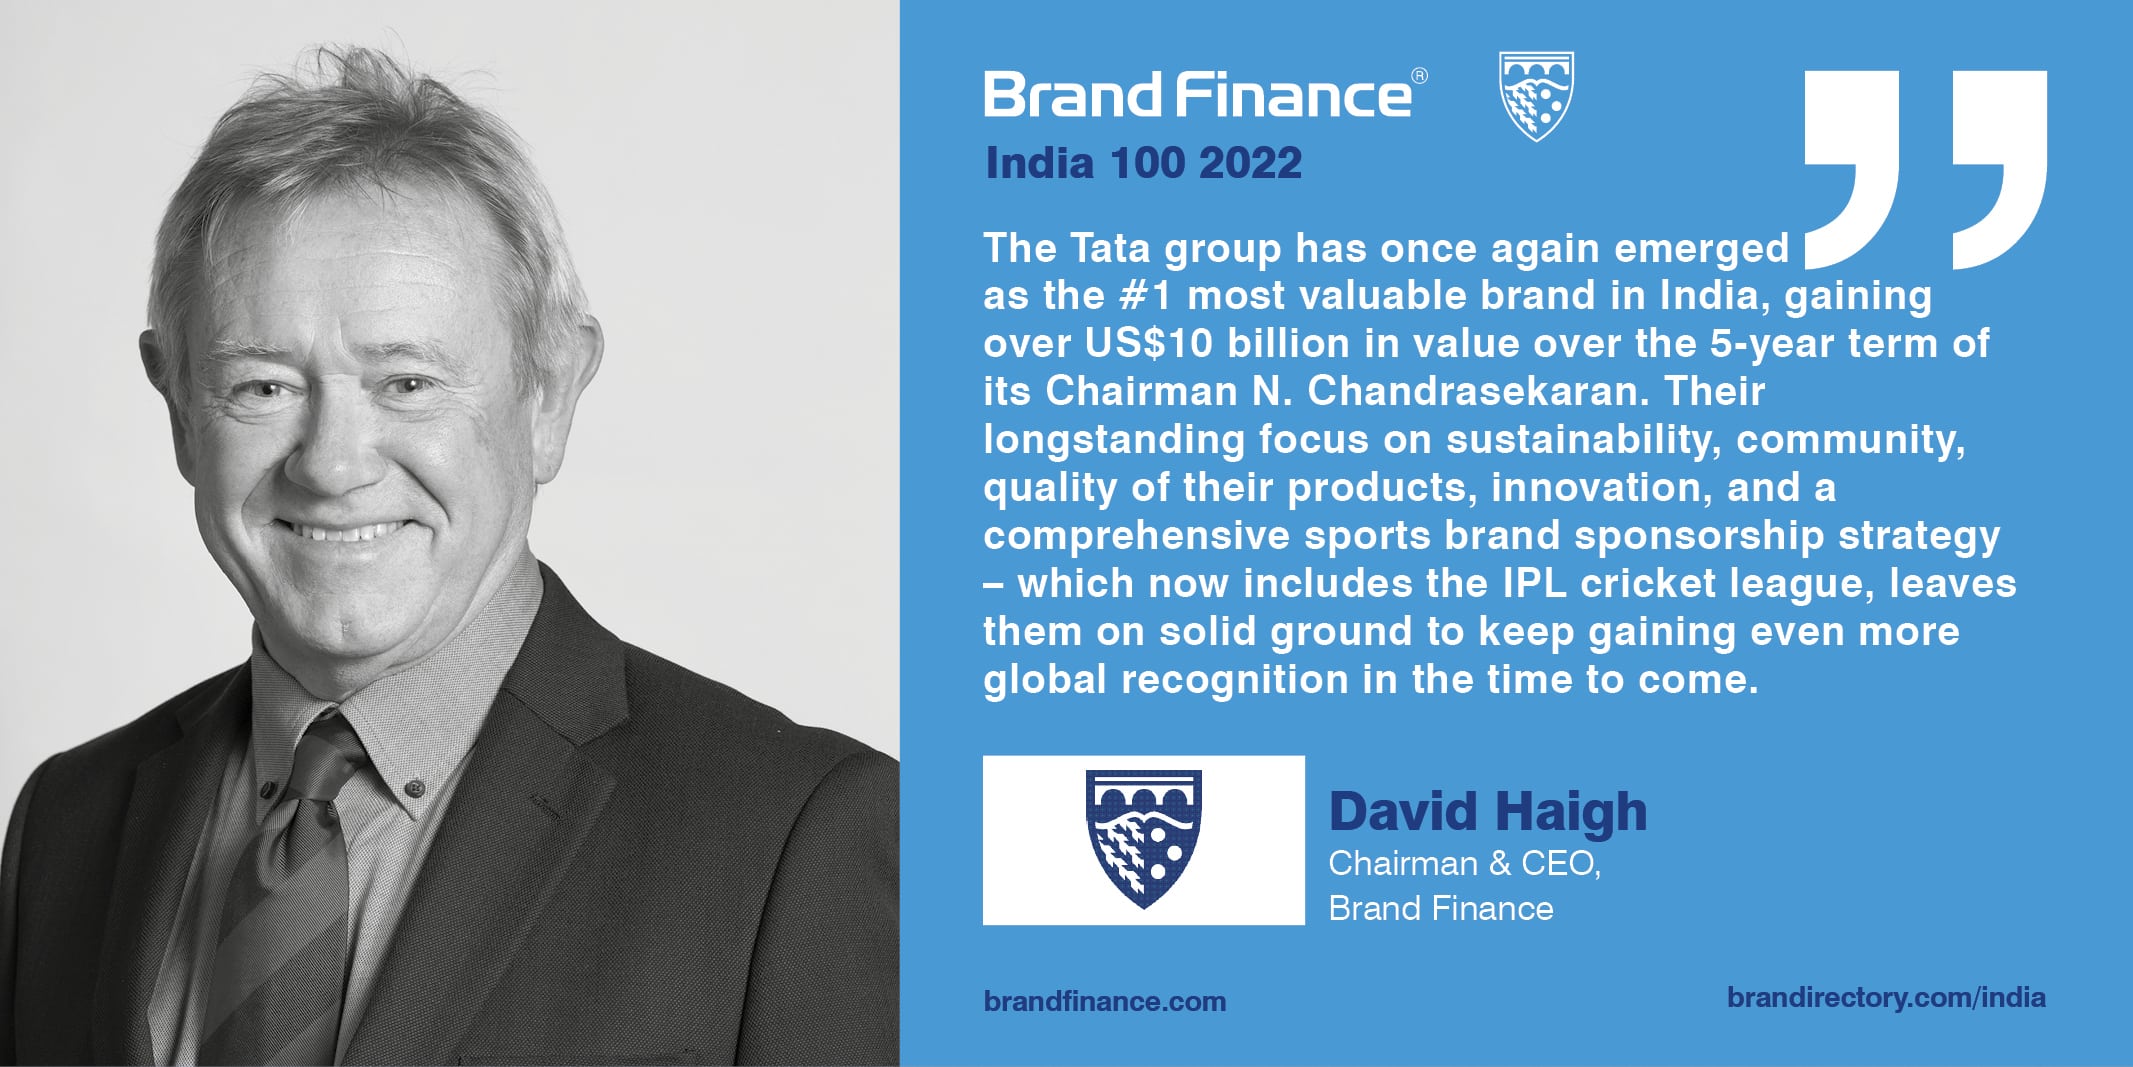 David Haigh, Chairman & CEO on Tata Group's performance